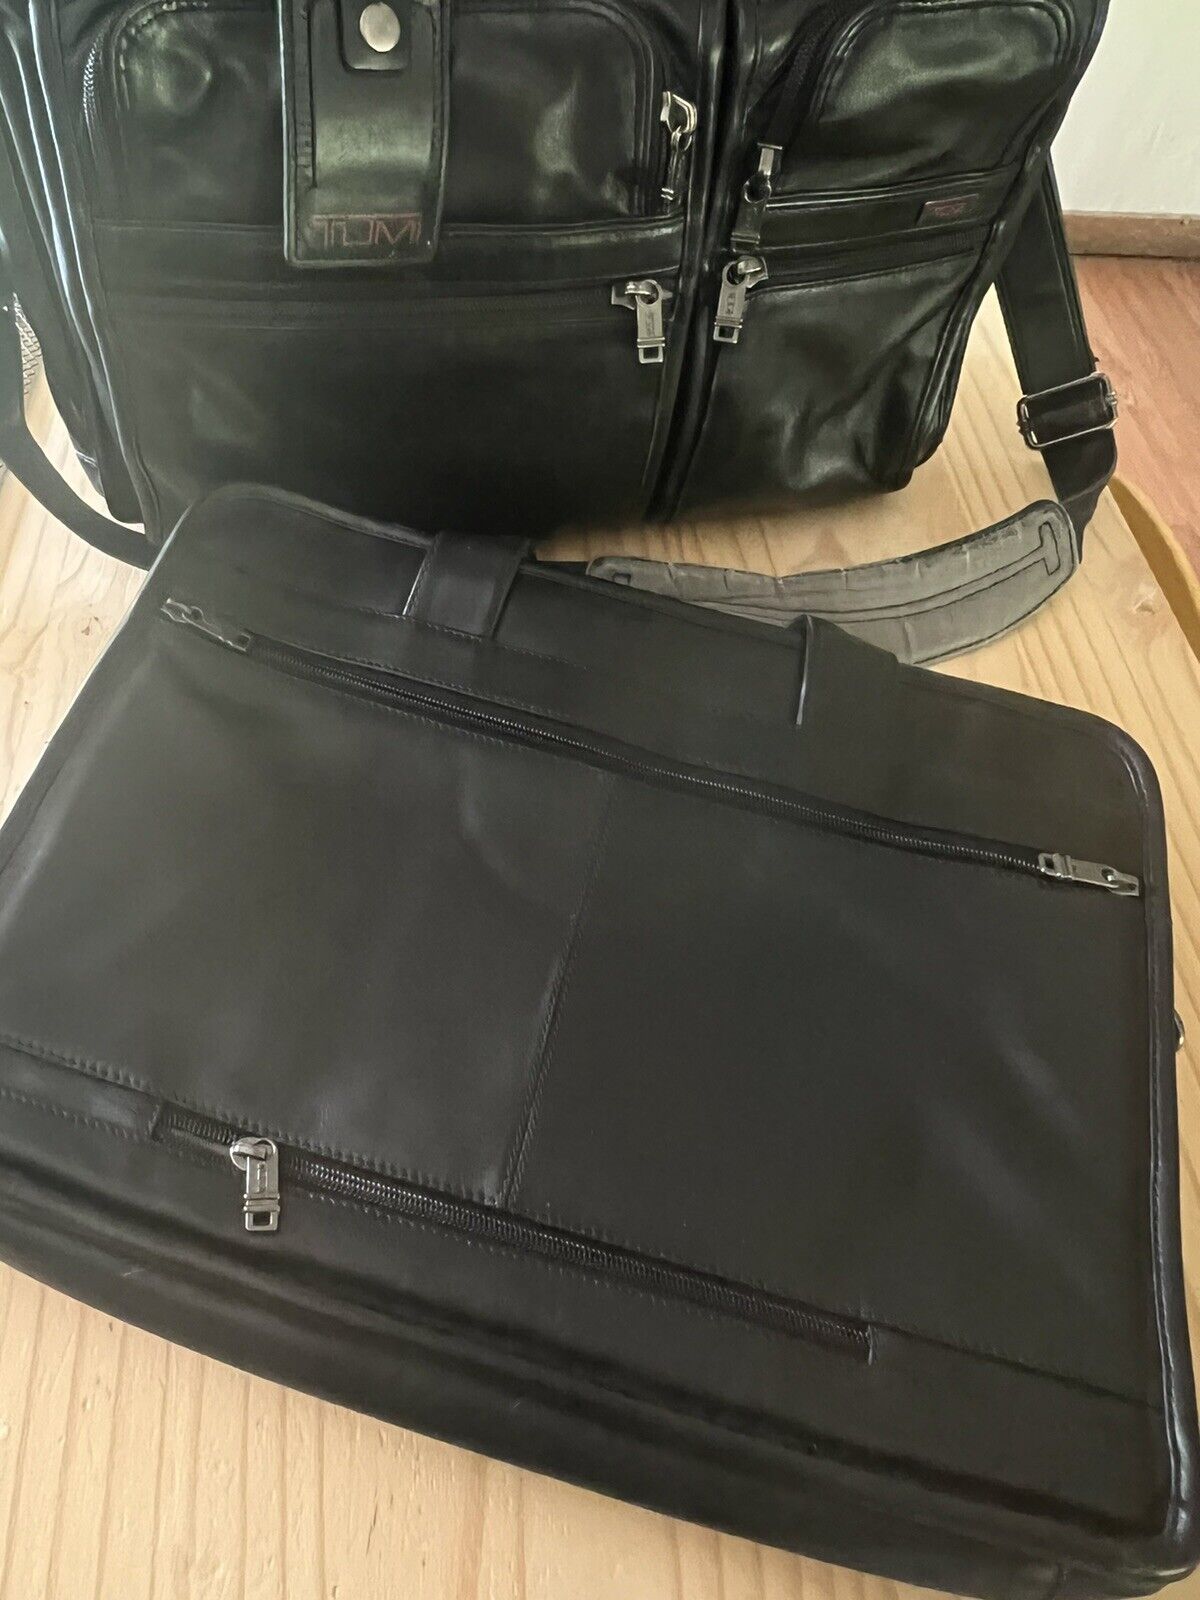 Tumi Expandable Black Leather Briefcase  Bag Carry & Laptop Leather Case Set